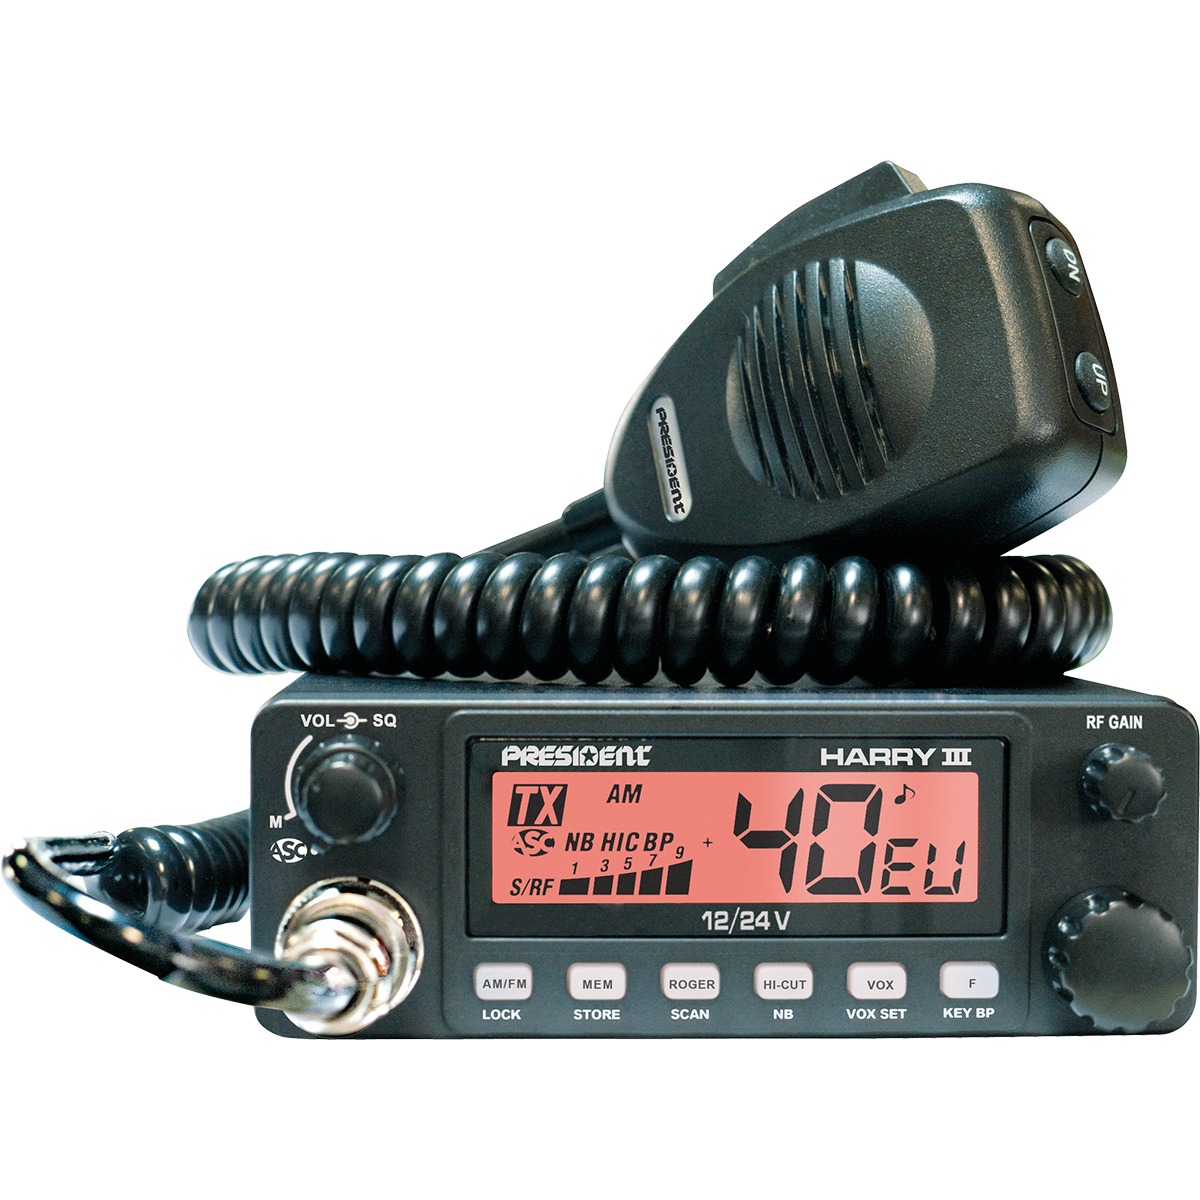 HARRY III ASC 12/24V - AM/FM transceivers - CB Radio / Ham Radio -  President Electronics